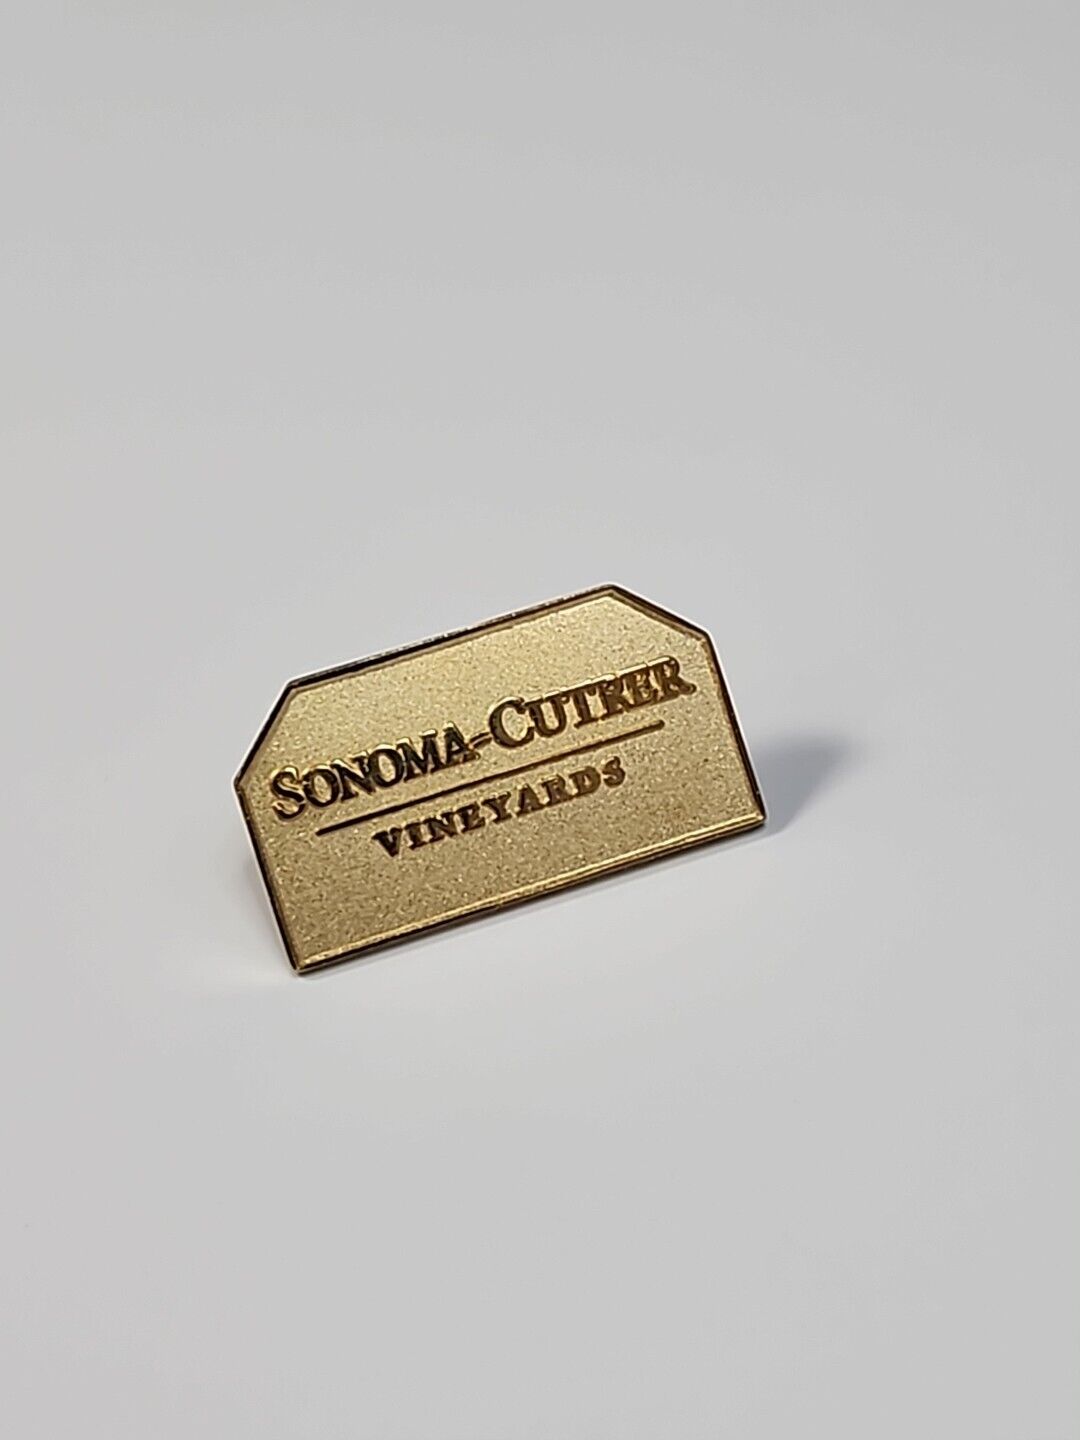 Sonoma-Cutter Vineyards Souvenir Lapel Pin Gold Color Windsor California